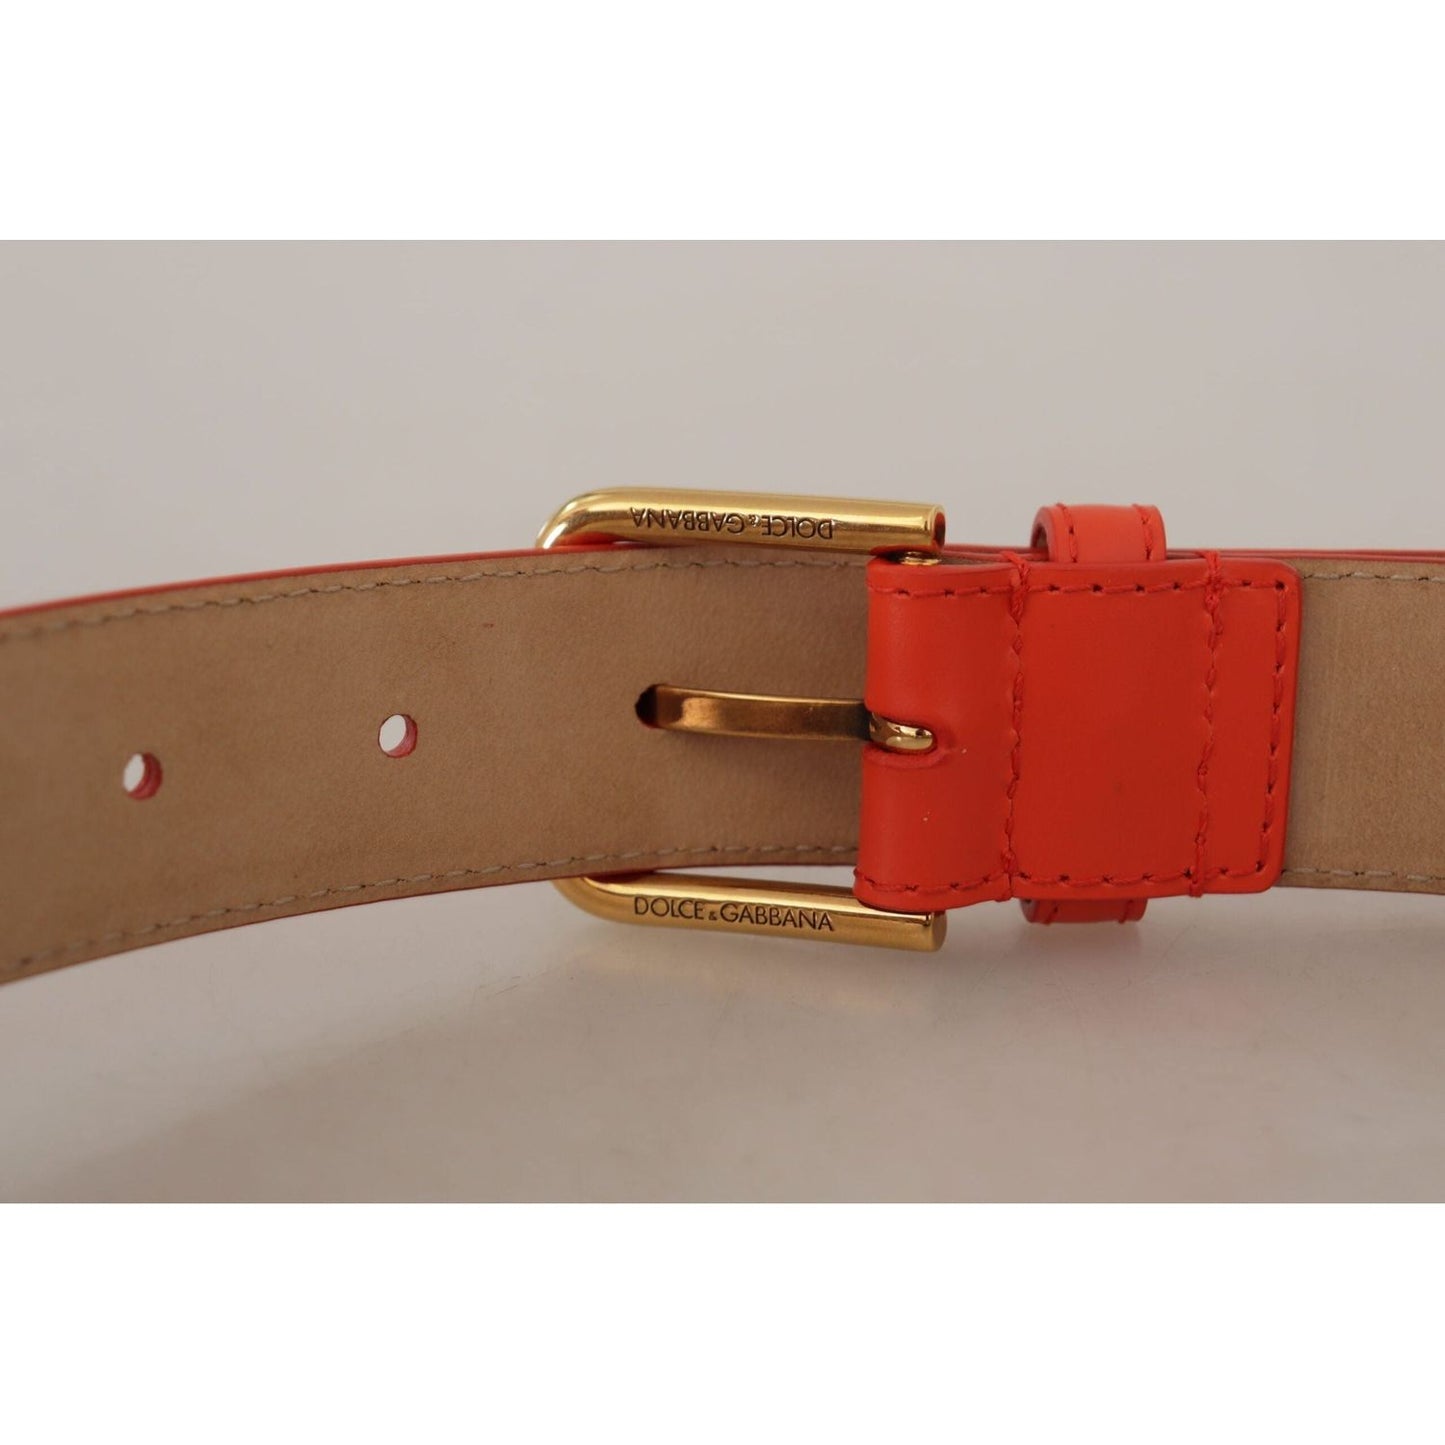 Dolce & Gabbana Chic Orange Leather Belt with Headphone Case orange-leather-devotion-heart-micro-bag-headphones-belt IMG_8607-1-scaled-c0e1f38a-b62.jpg